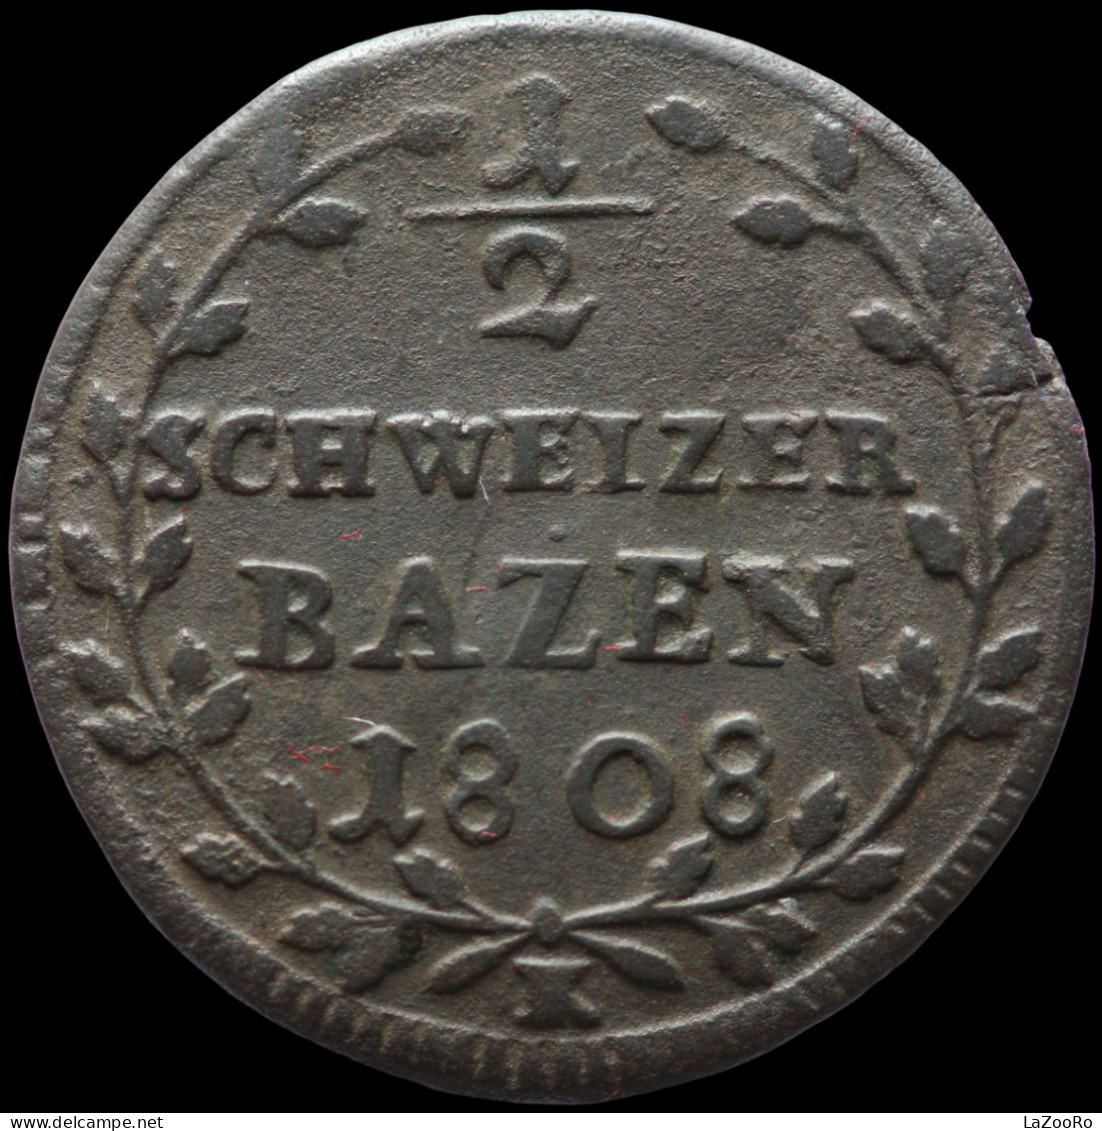 LaZooRo: Switzerland SAINT GALL 1/2 Batzen 1808 VF - Silver - Kanton St. Gallen